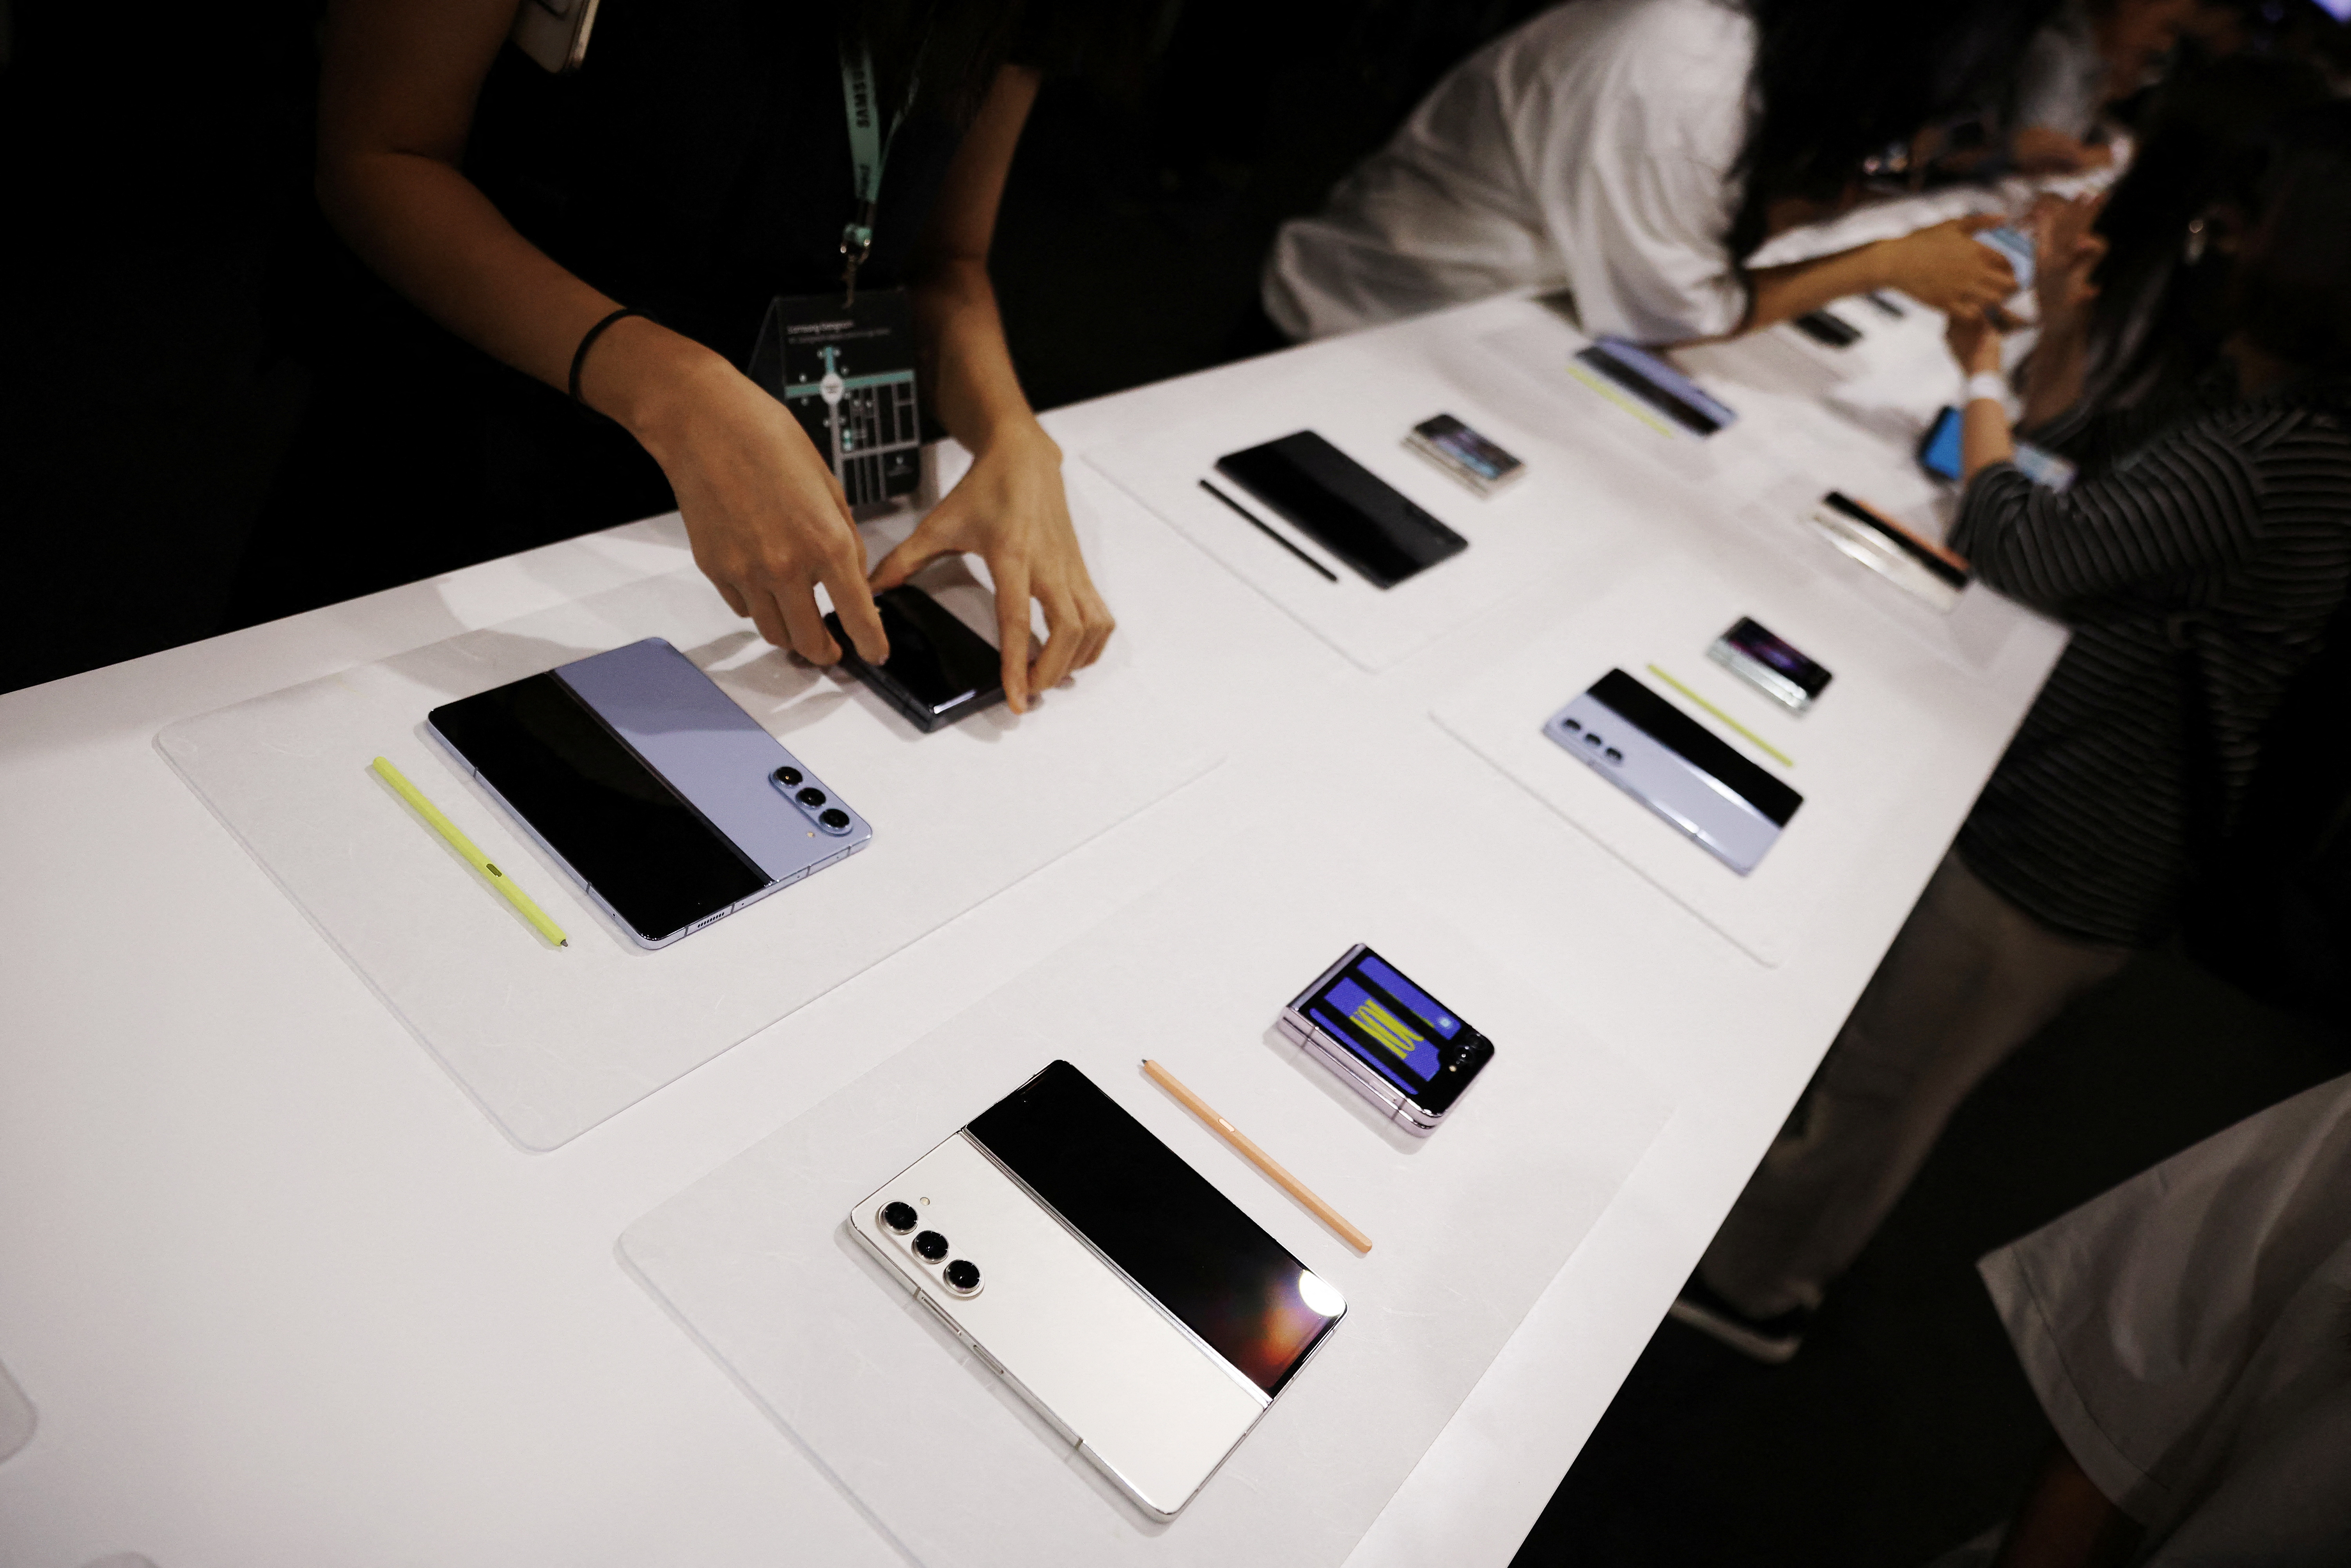 Z Fold 3: Samsung aims to take folding phones mainstream - BBC News